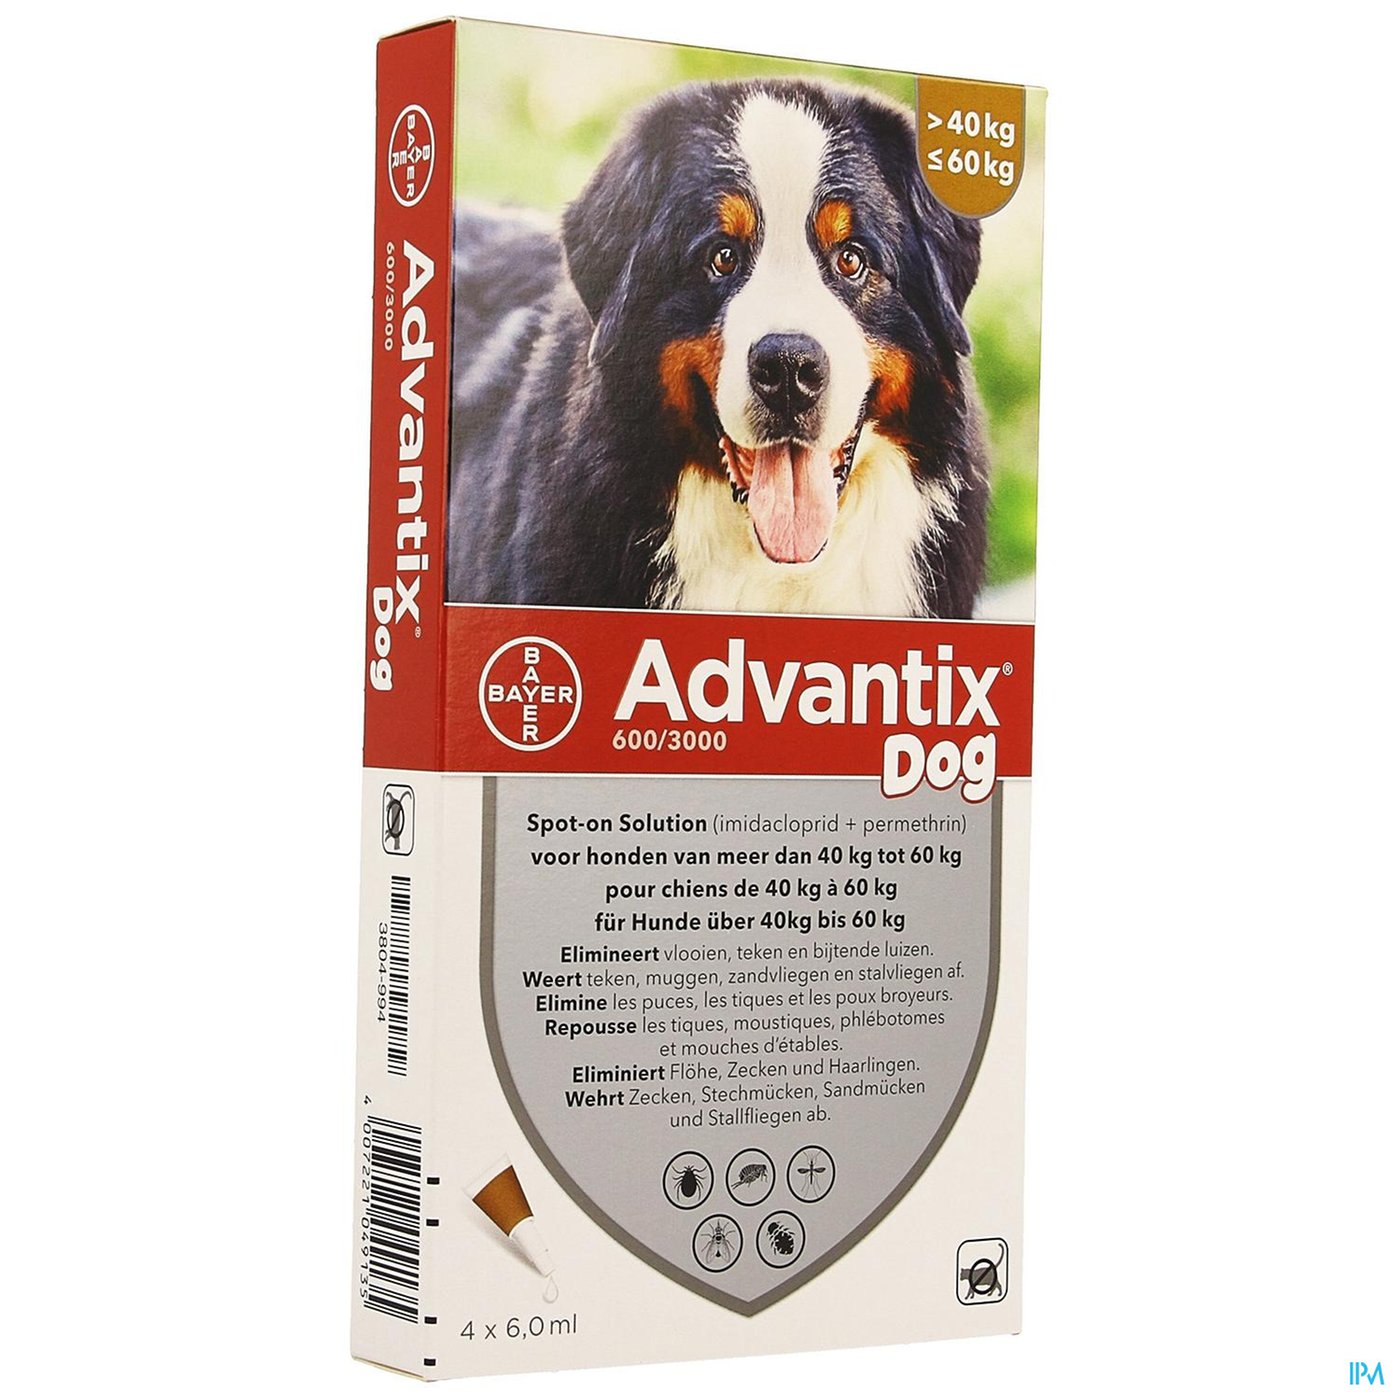 Advantix Dog Spot-on Opl Hond 40-60kg Pipet 4x6ml packshot